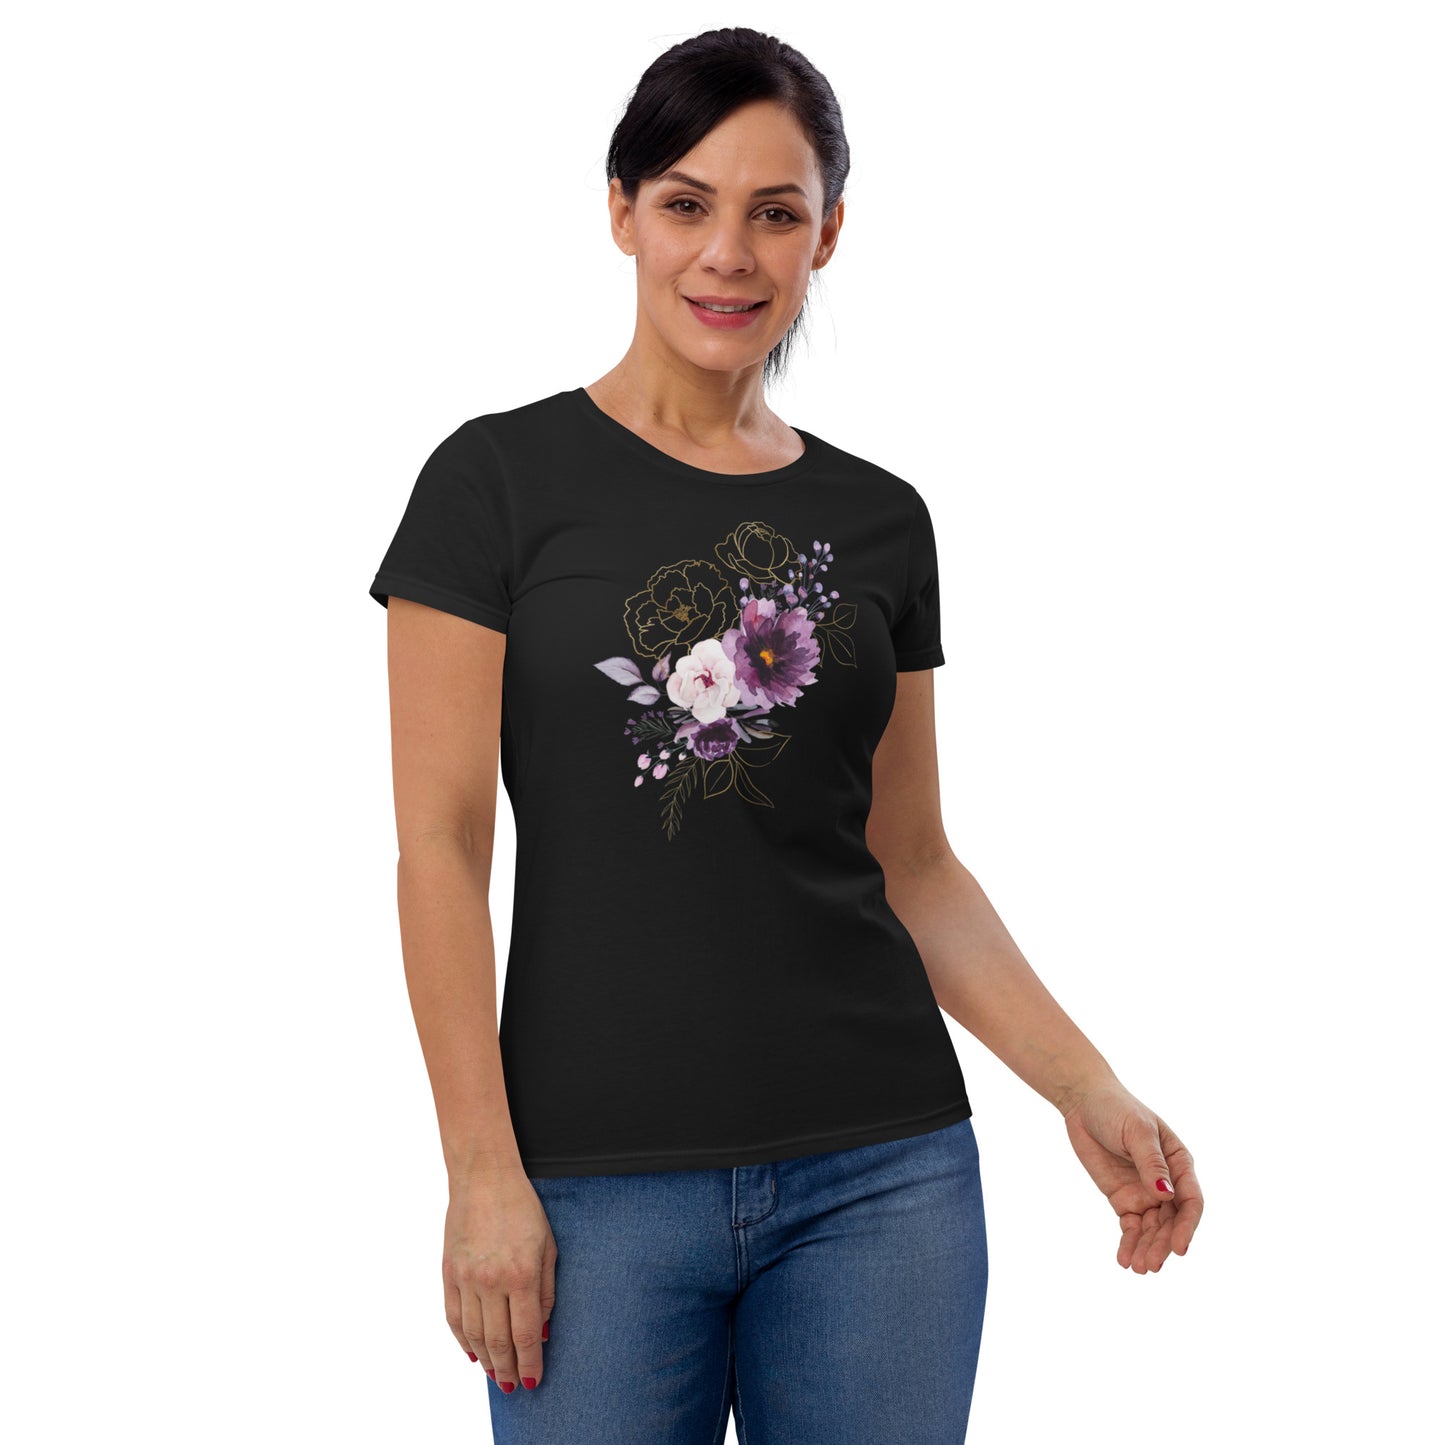 Floral Print Women's Short Sleeve T-Shirt | Premium Cotton and Blend Styles